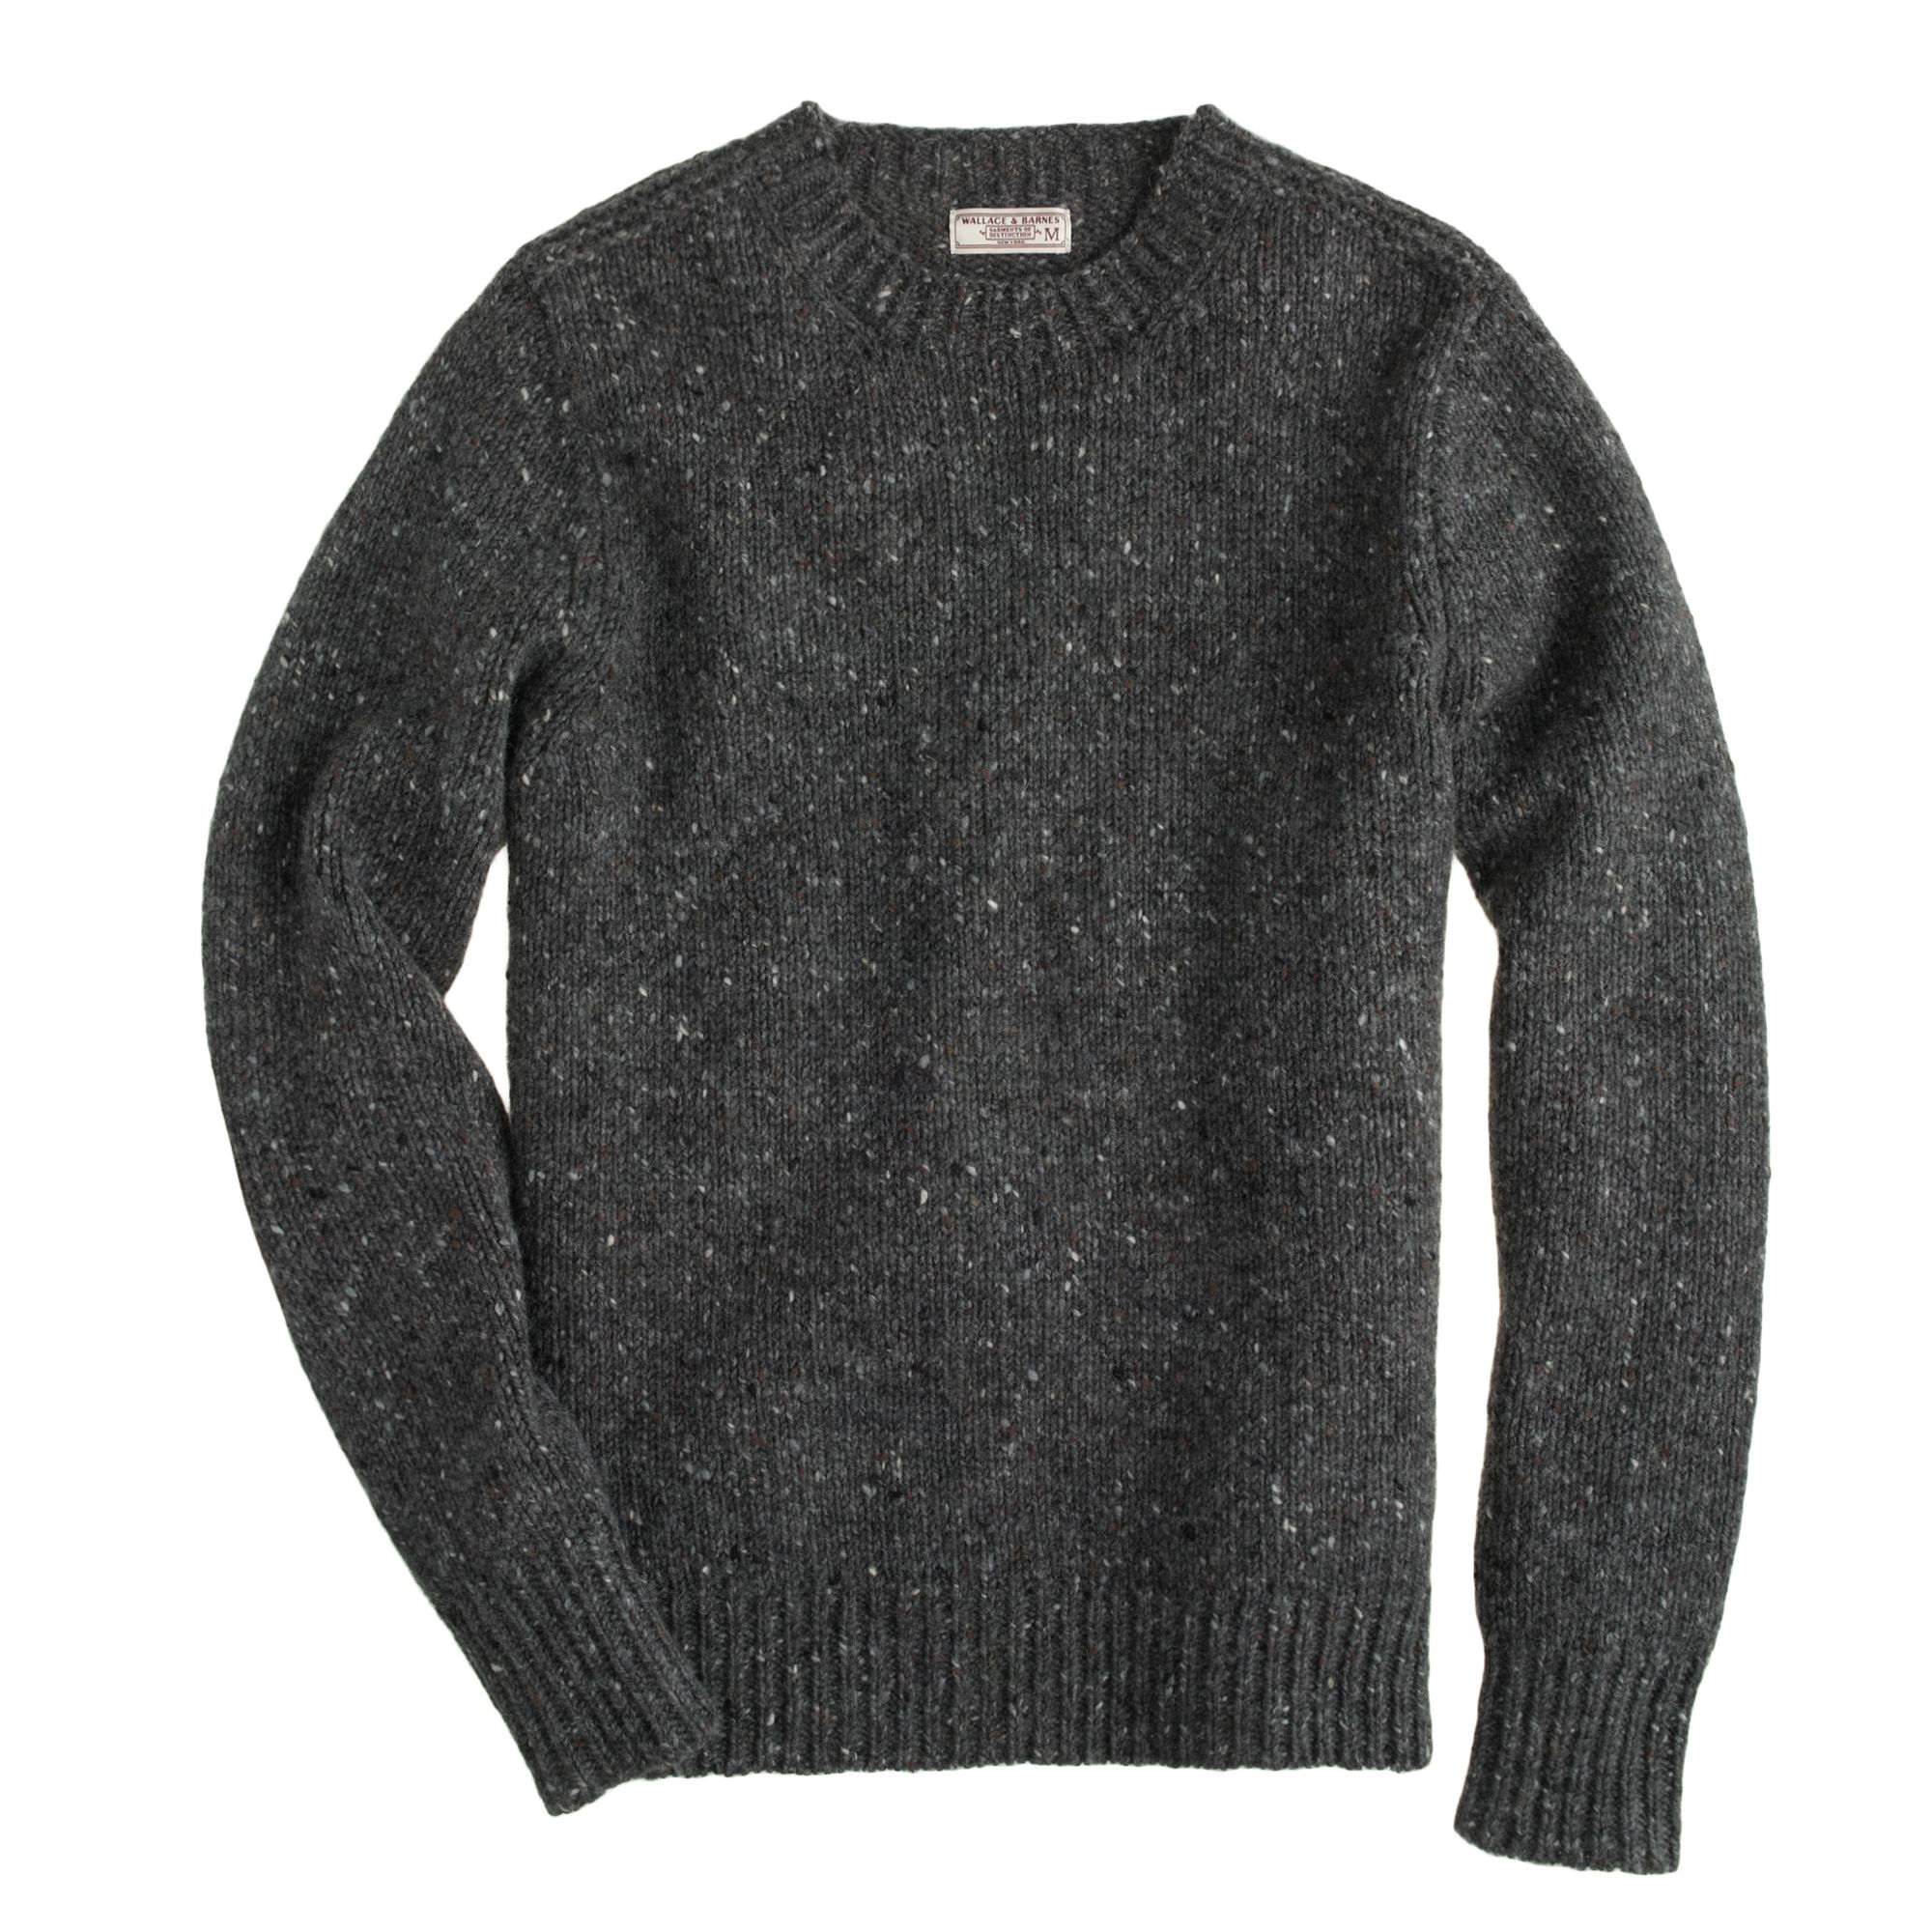 Lyst - J.Crew Wallace Barnes Donegal Wool Sweater in Gray for Men